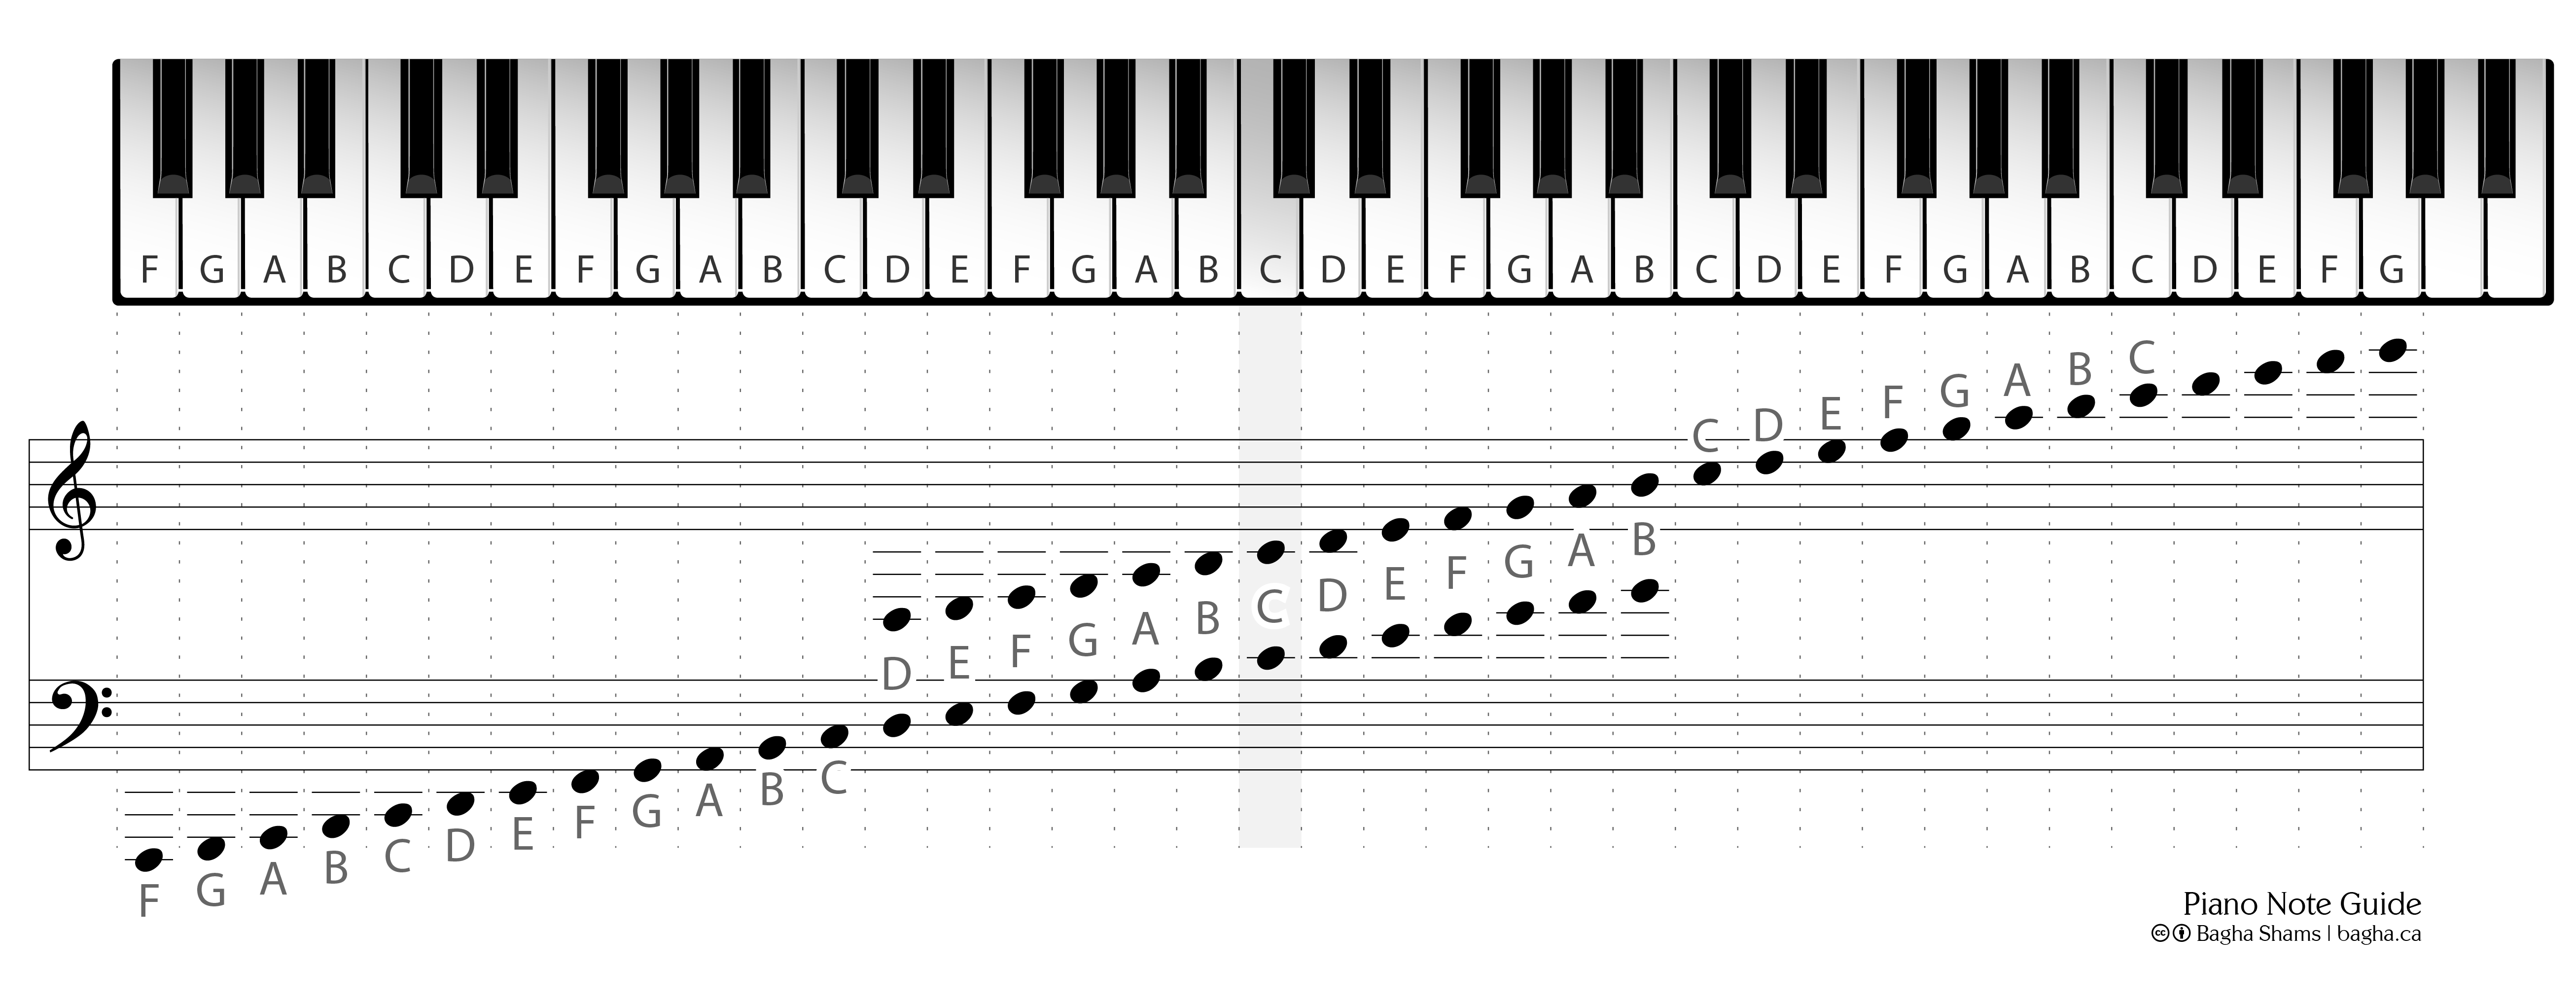 piano keyboard cheat sheet